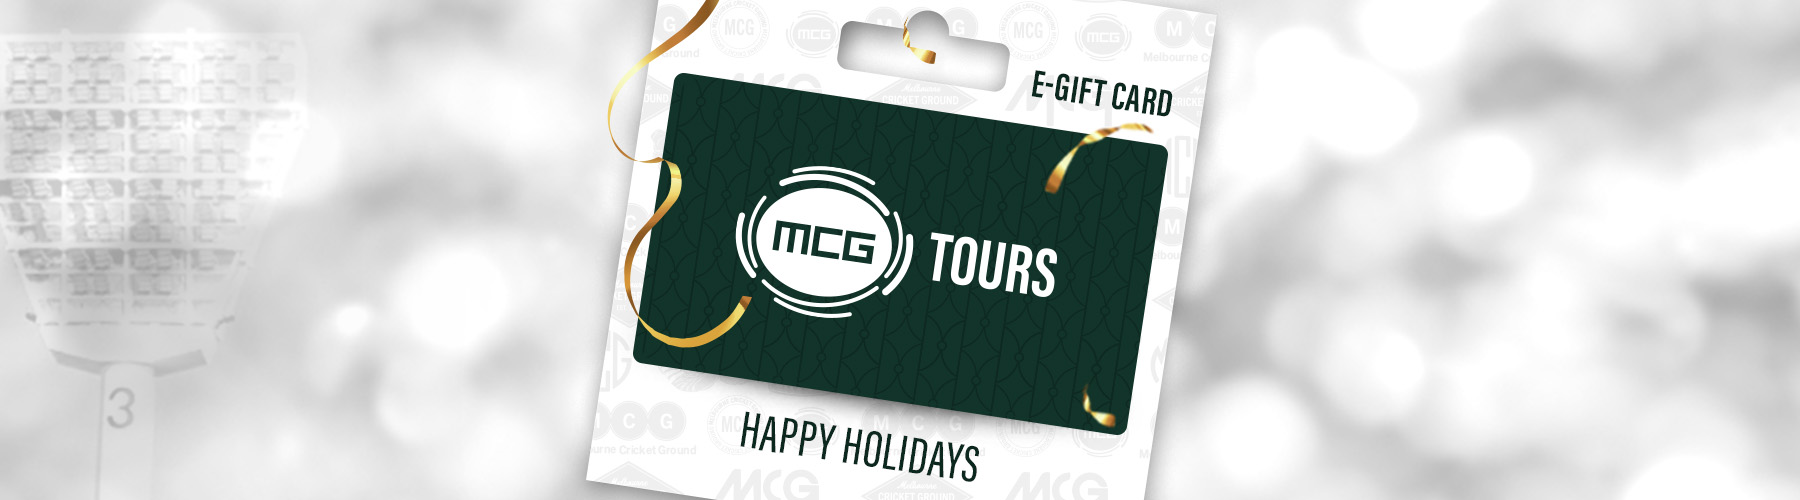 mcg tours gift card